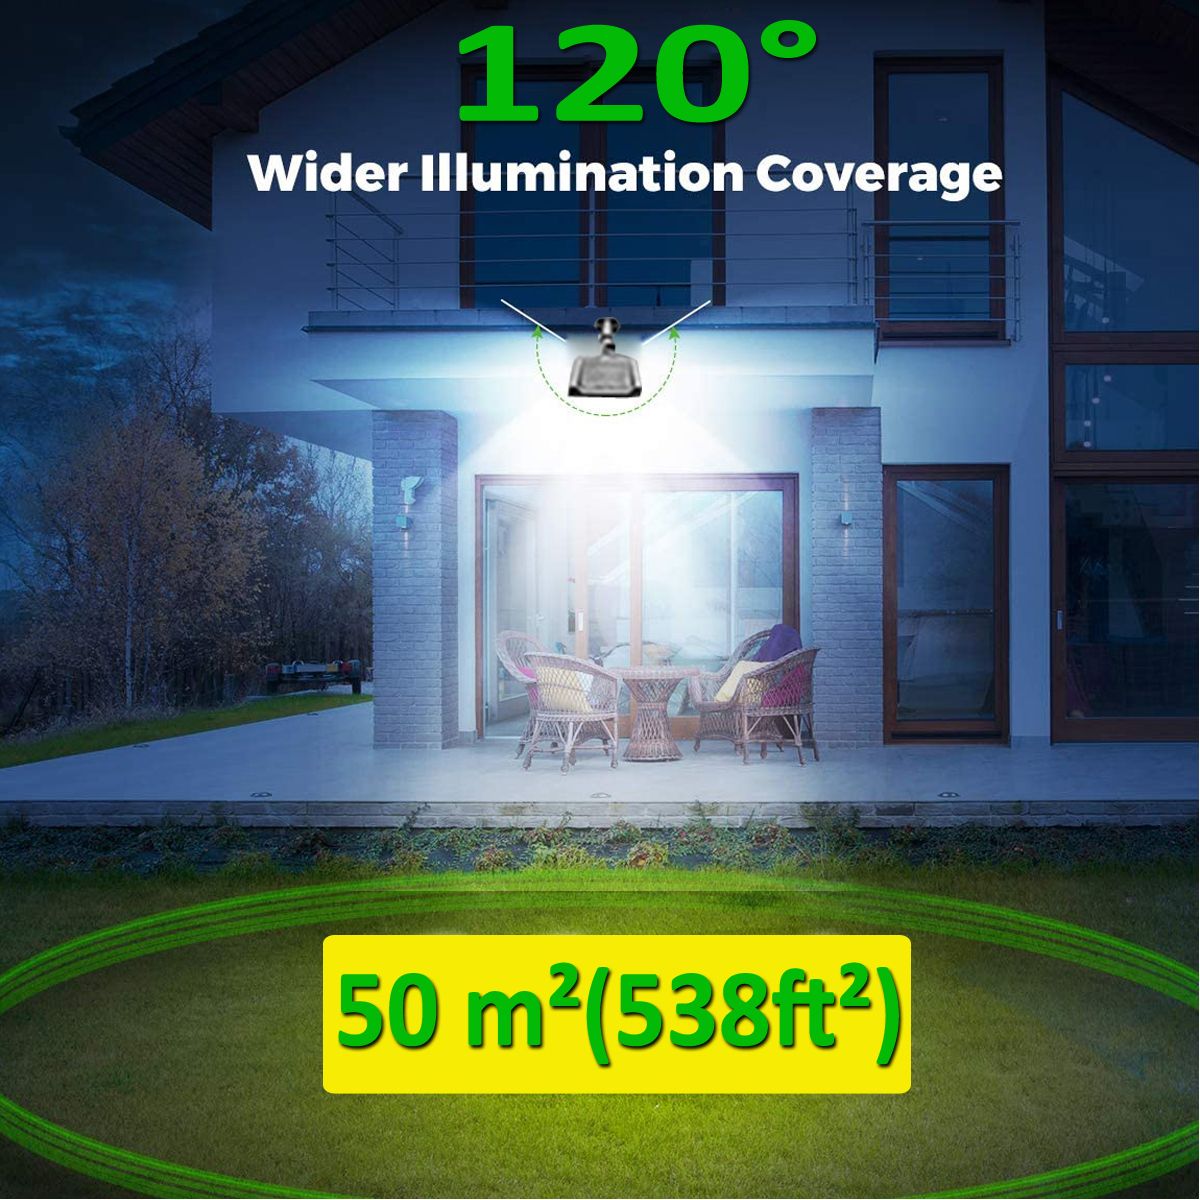 12Pcs-98LED-Solar-Street-Wall-Light-PIR-Motion-Sensor-Dimmable-Light-Outdoor-Garden-1733682